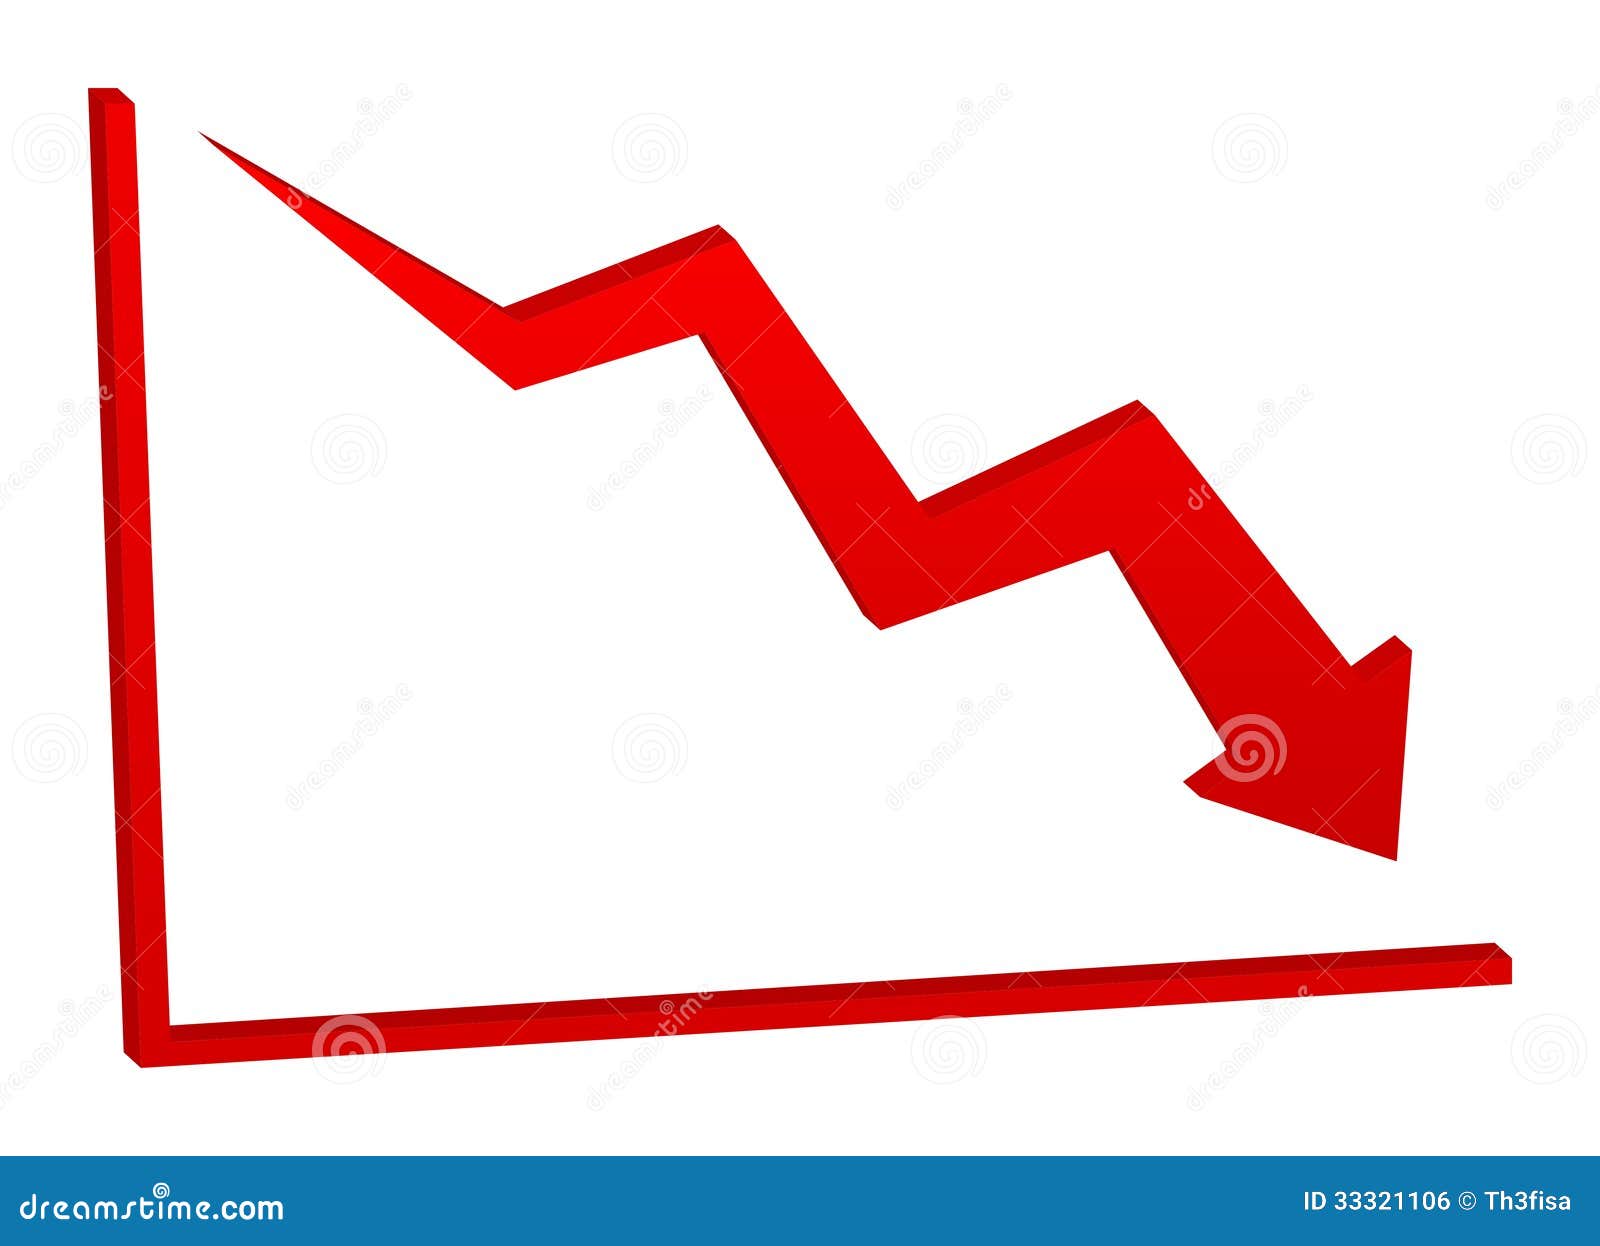 decreasing-red-arrow-chart-d-33321106.jpg